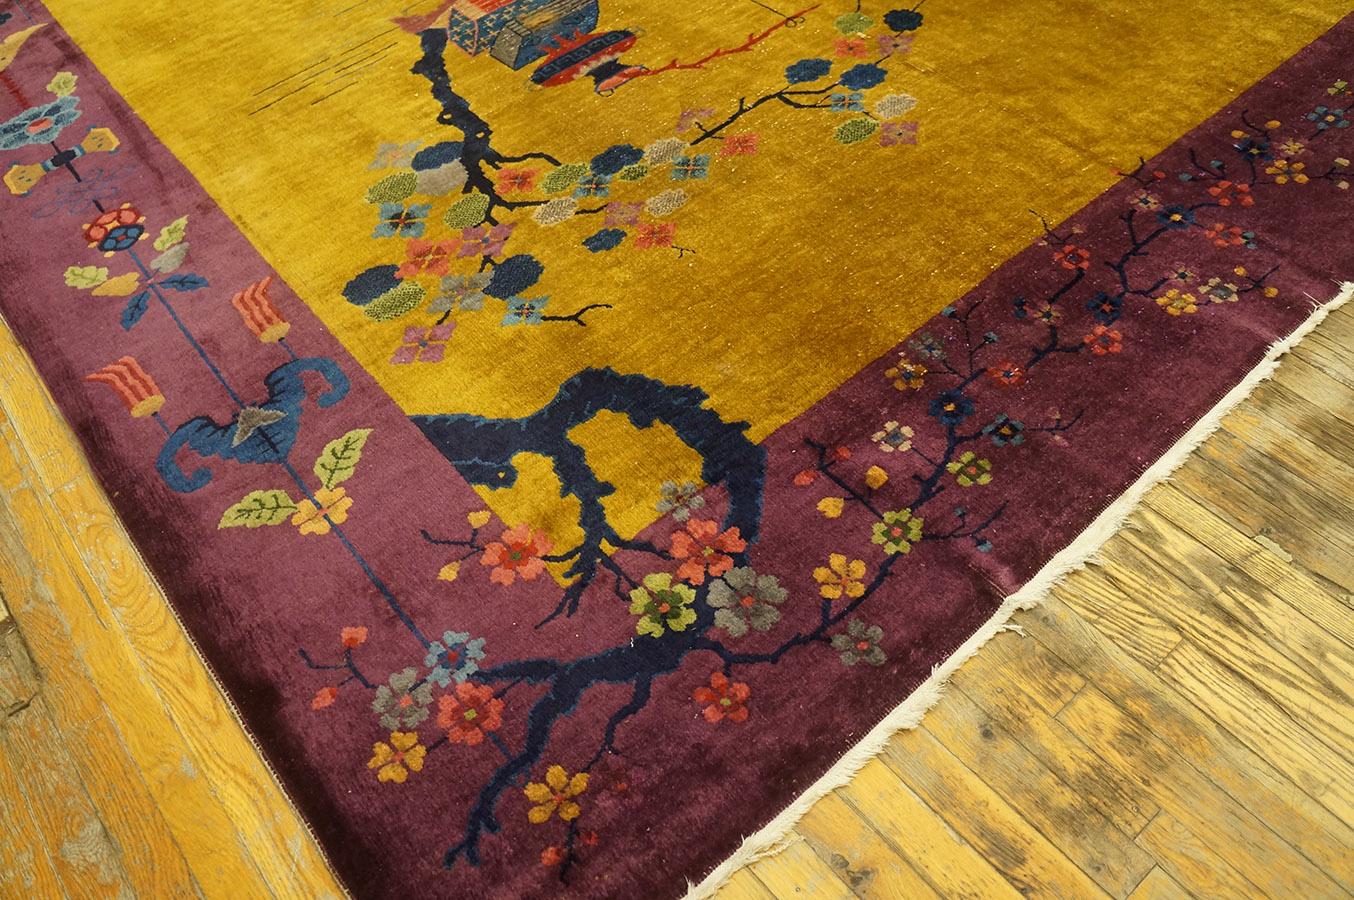 1920s Chinese Art Deco Carpet by Nichols Workshop ( 11'10